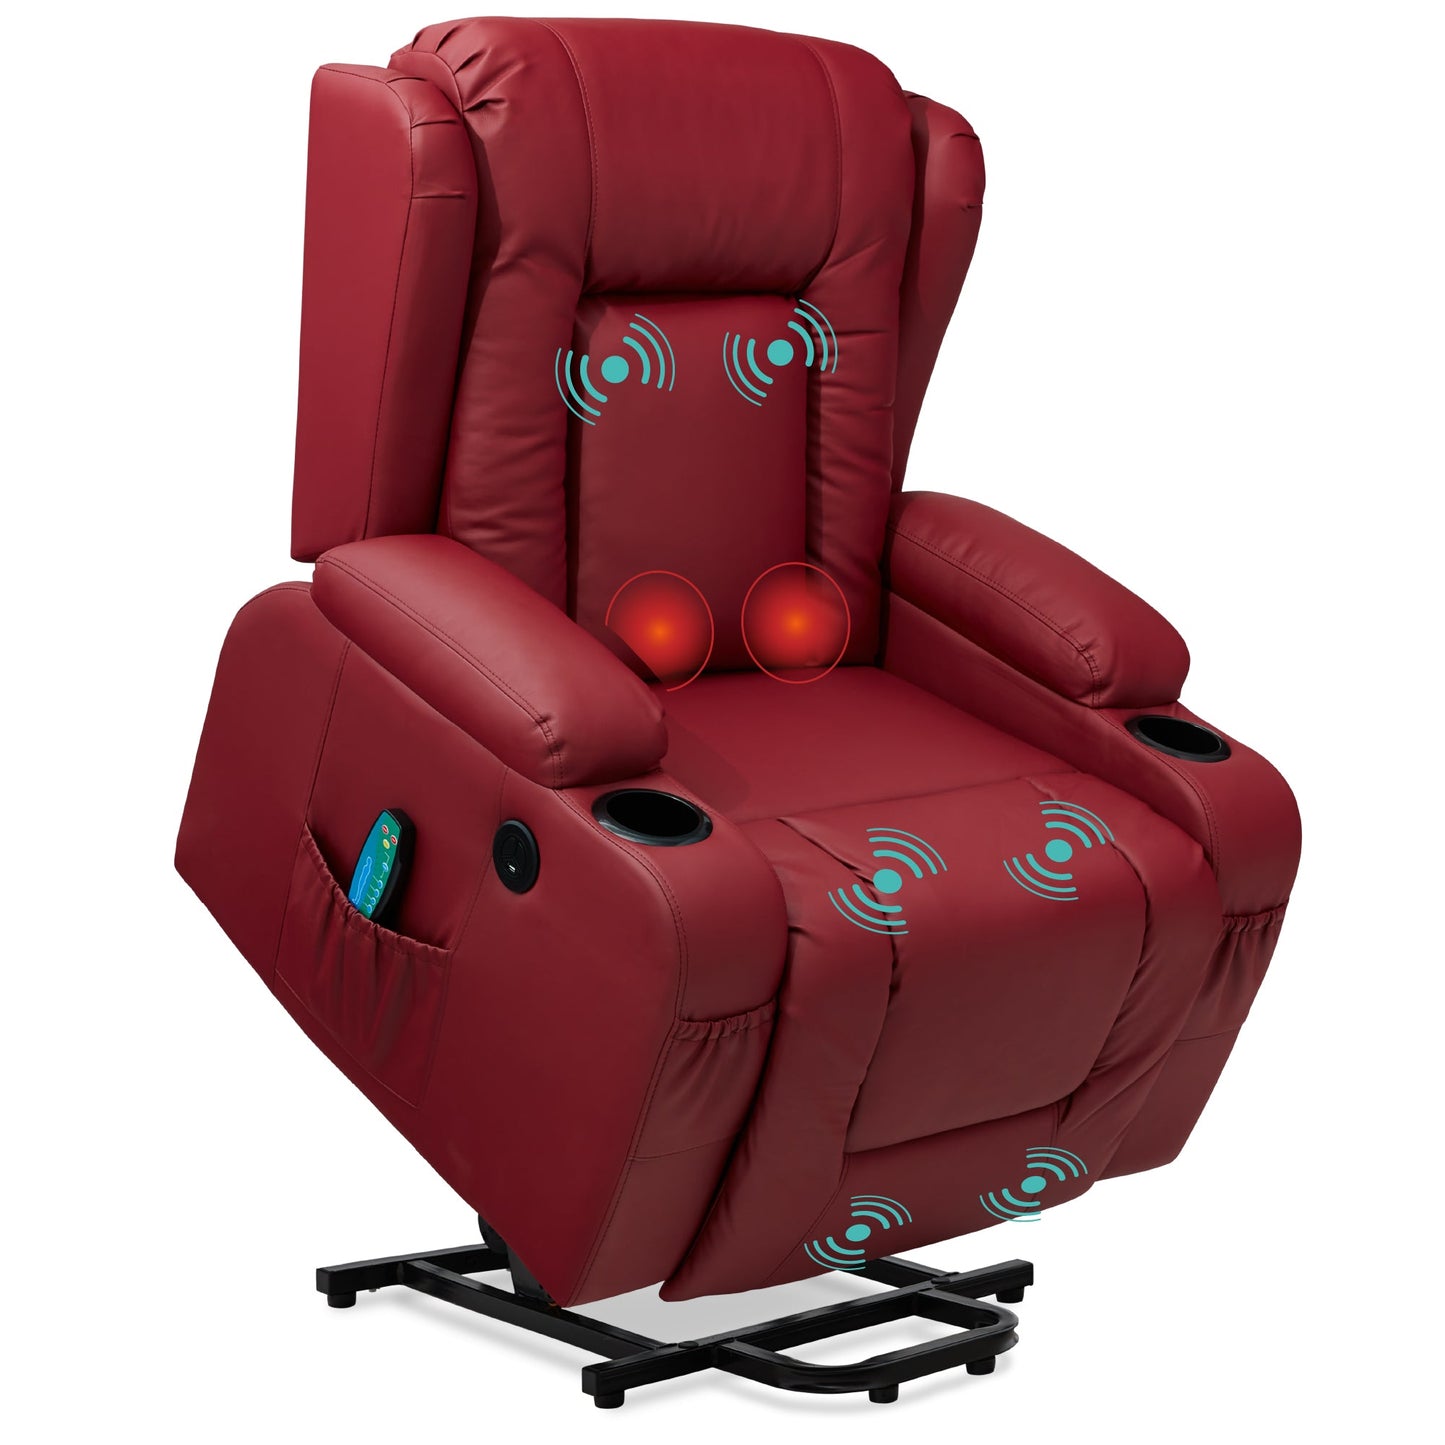 Electric Power Lift Recliner Massage Chair w/ Heat, USB Port, Cupholders